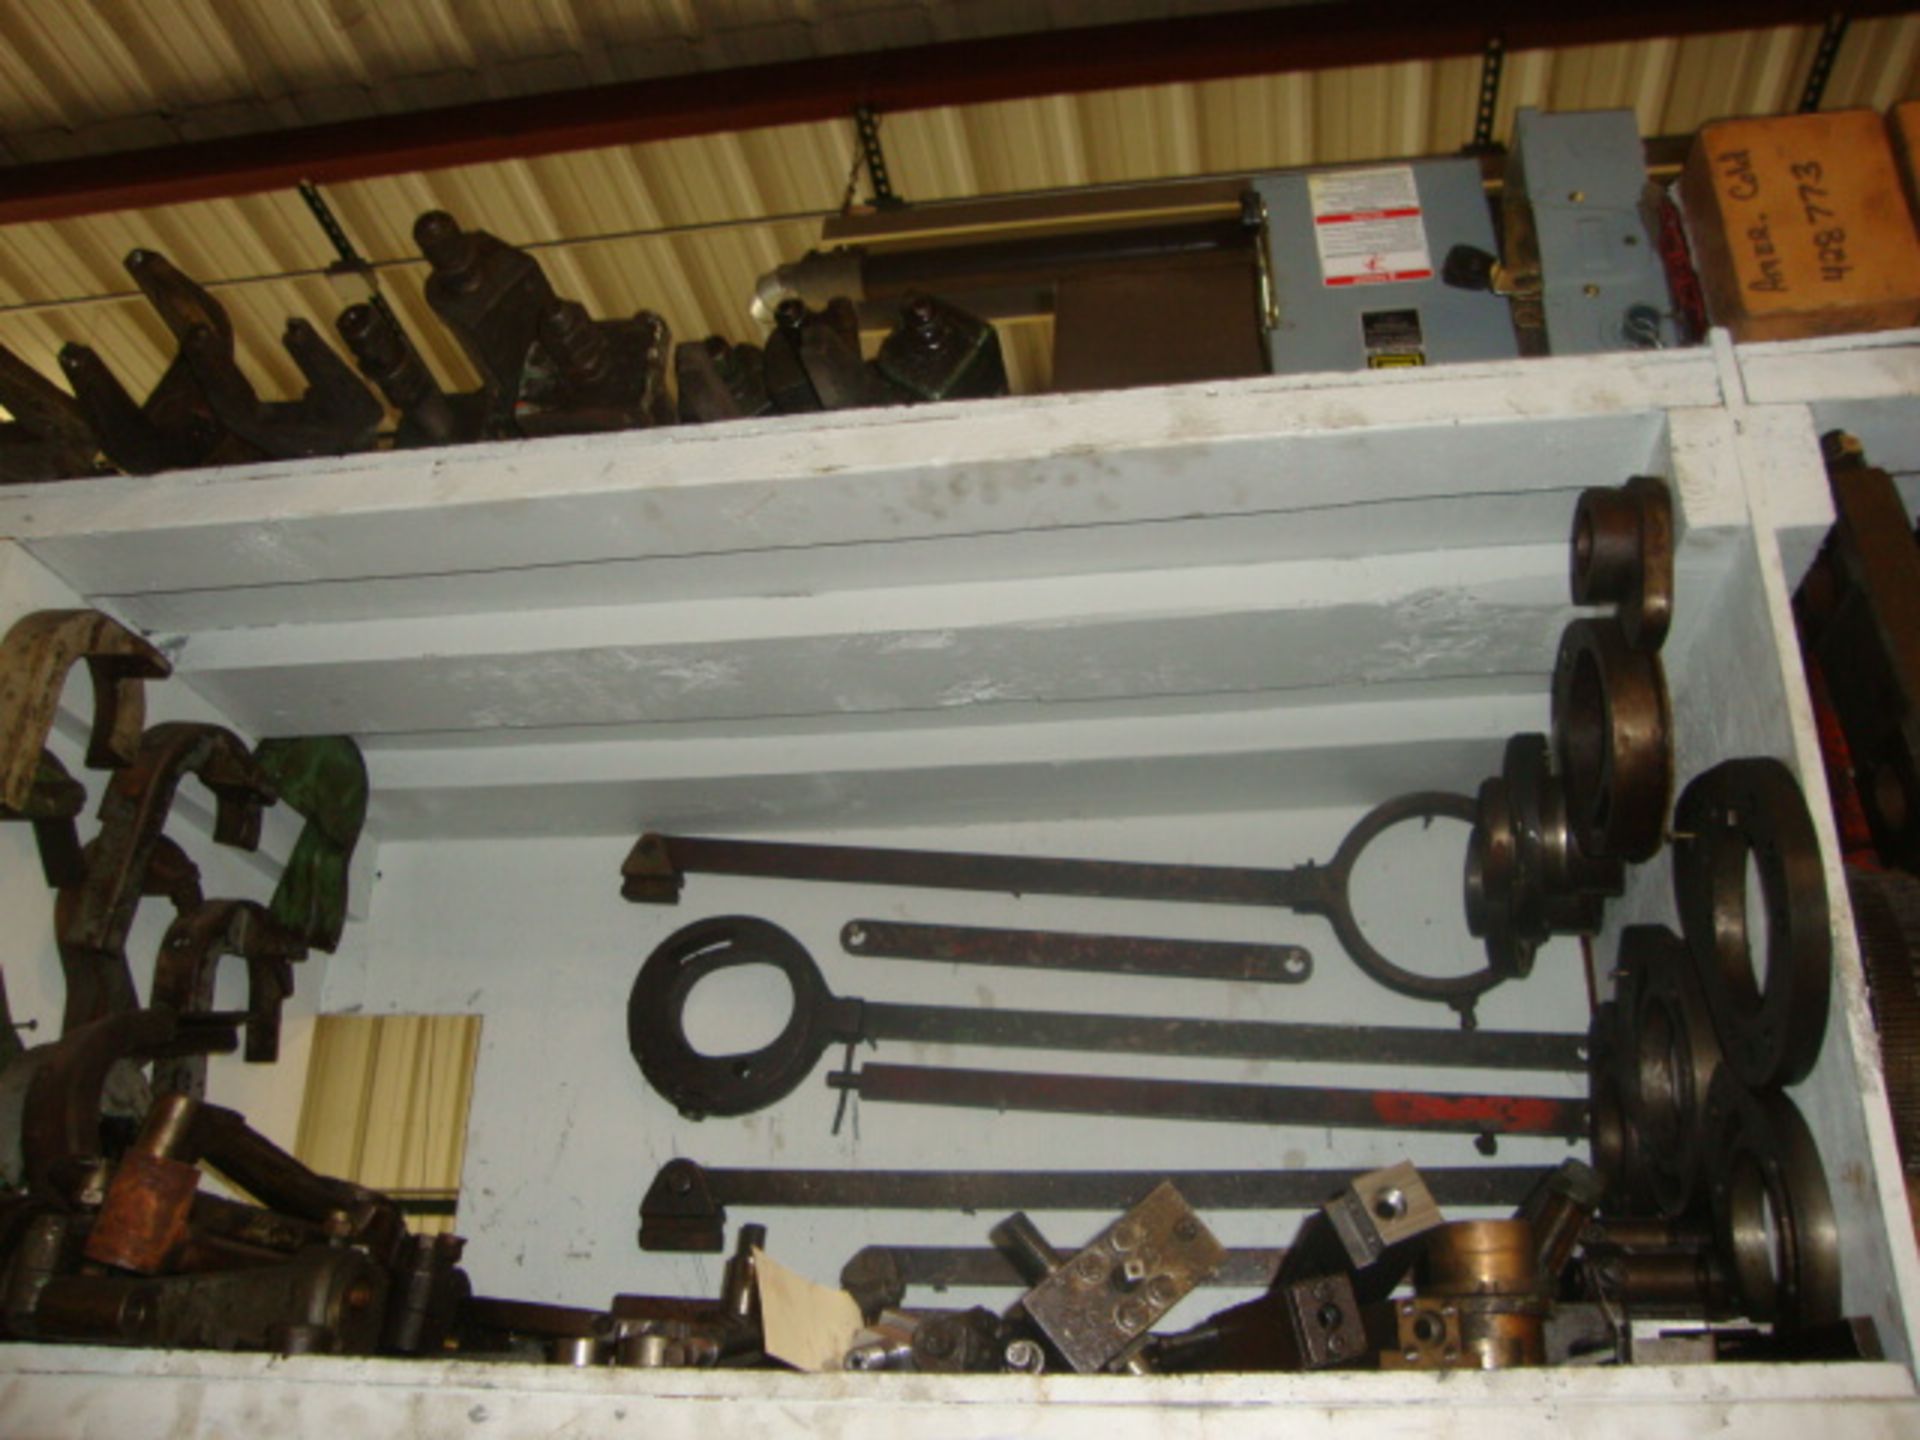 LOT CONSISTING OF WATERBURY FARREL REPAIR PARTS: gears, levers, blocks, slides, oilers, strippers, - Image 4 of 6